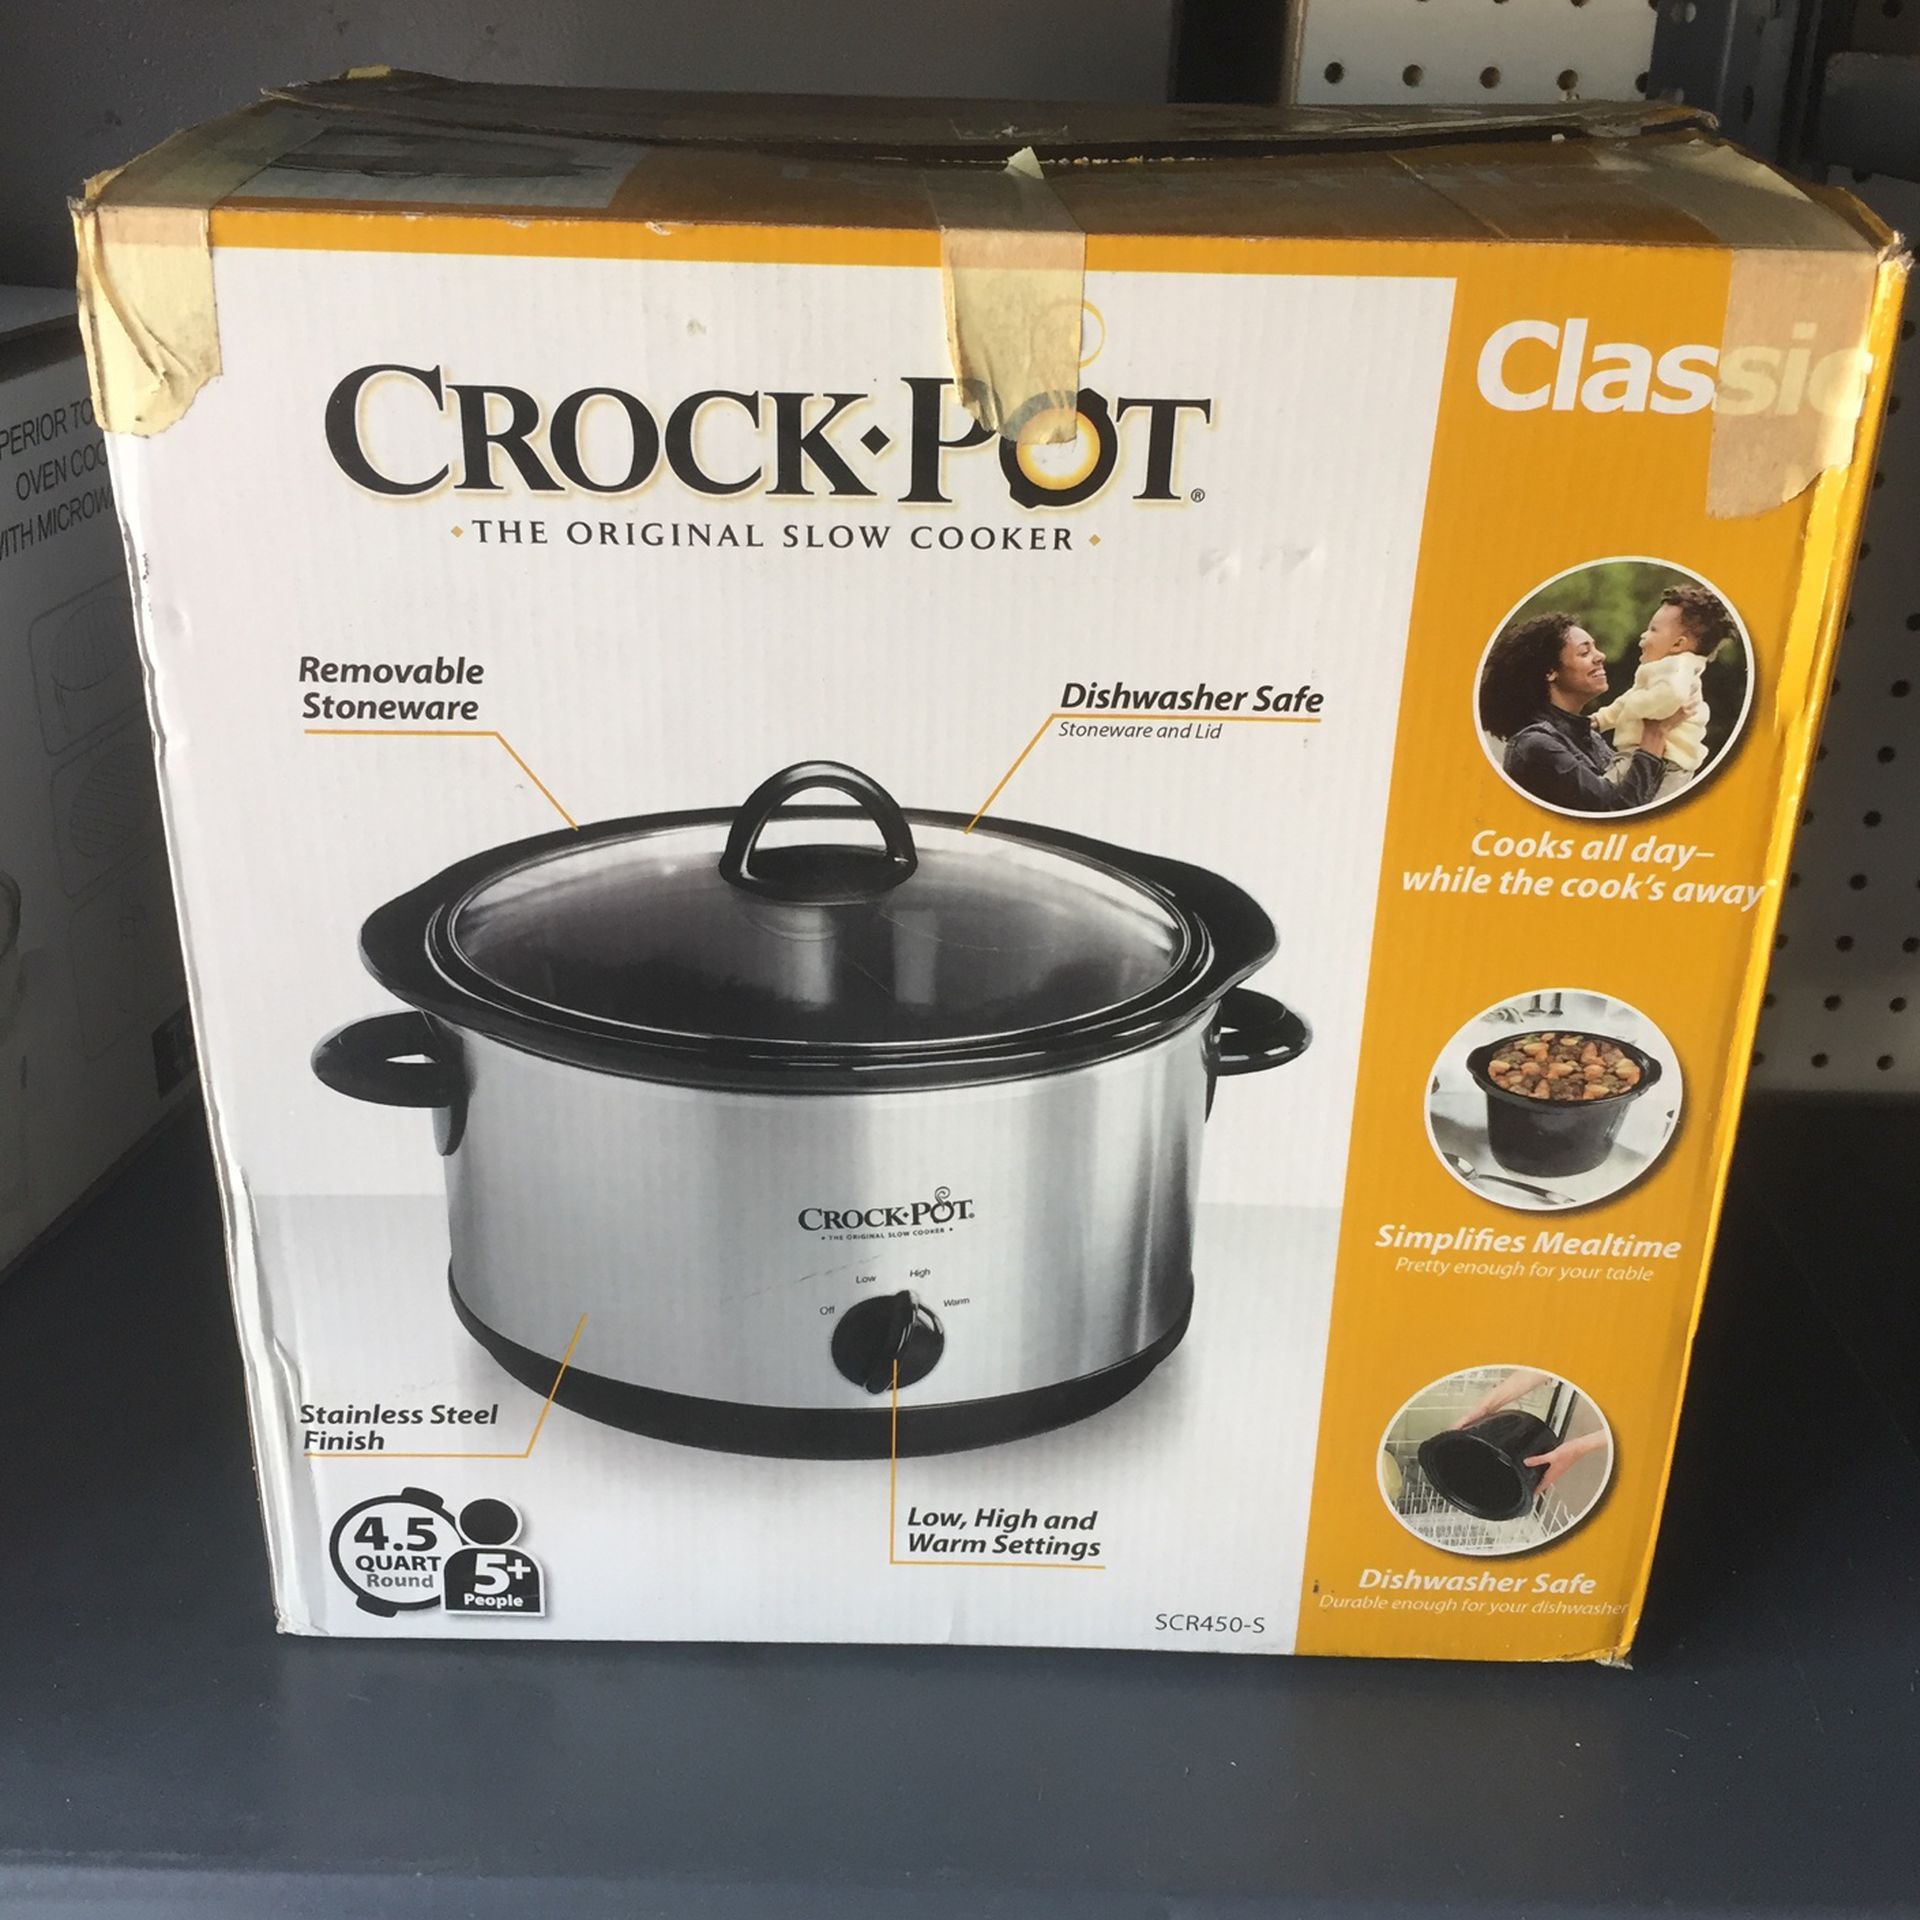 Crock-pot 4.5 quart. Never Used.